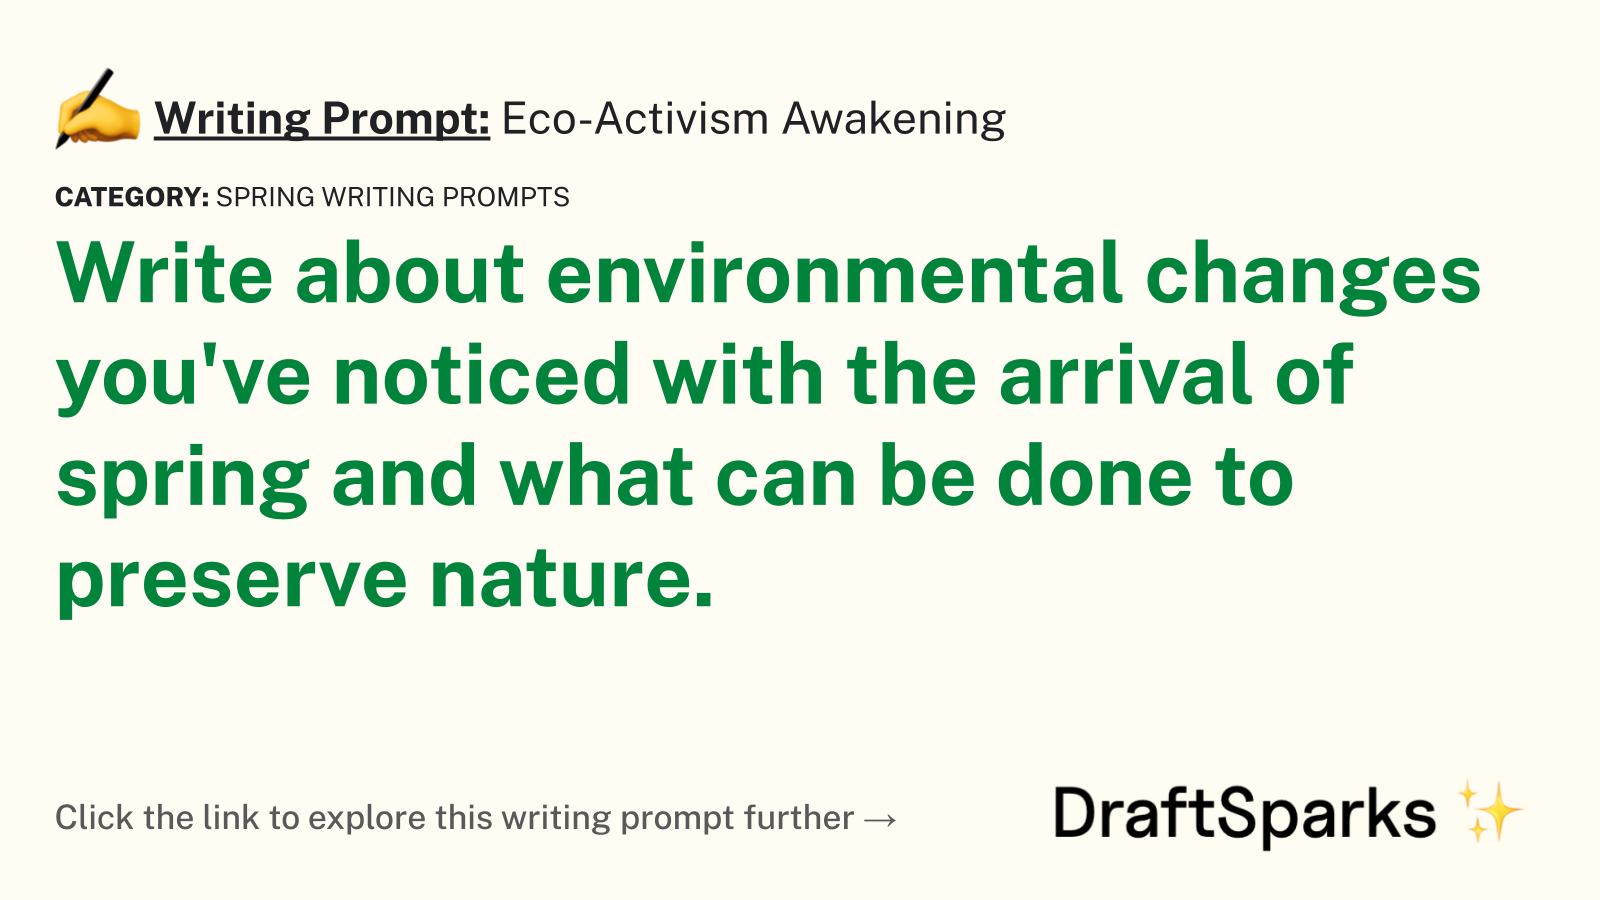 Eco-Activism Awakening